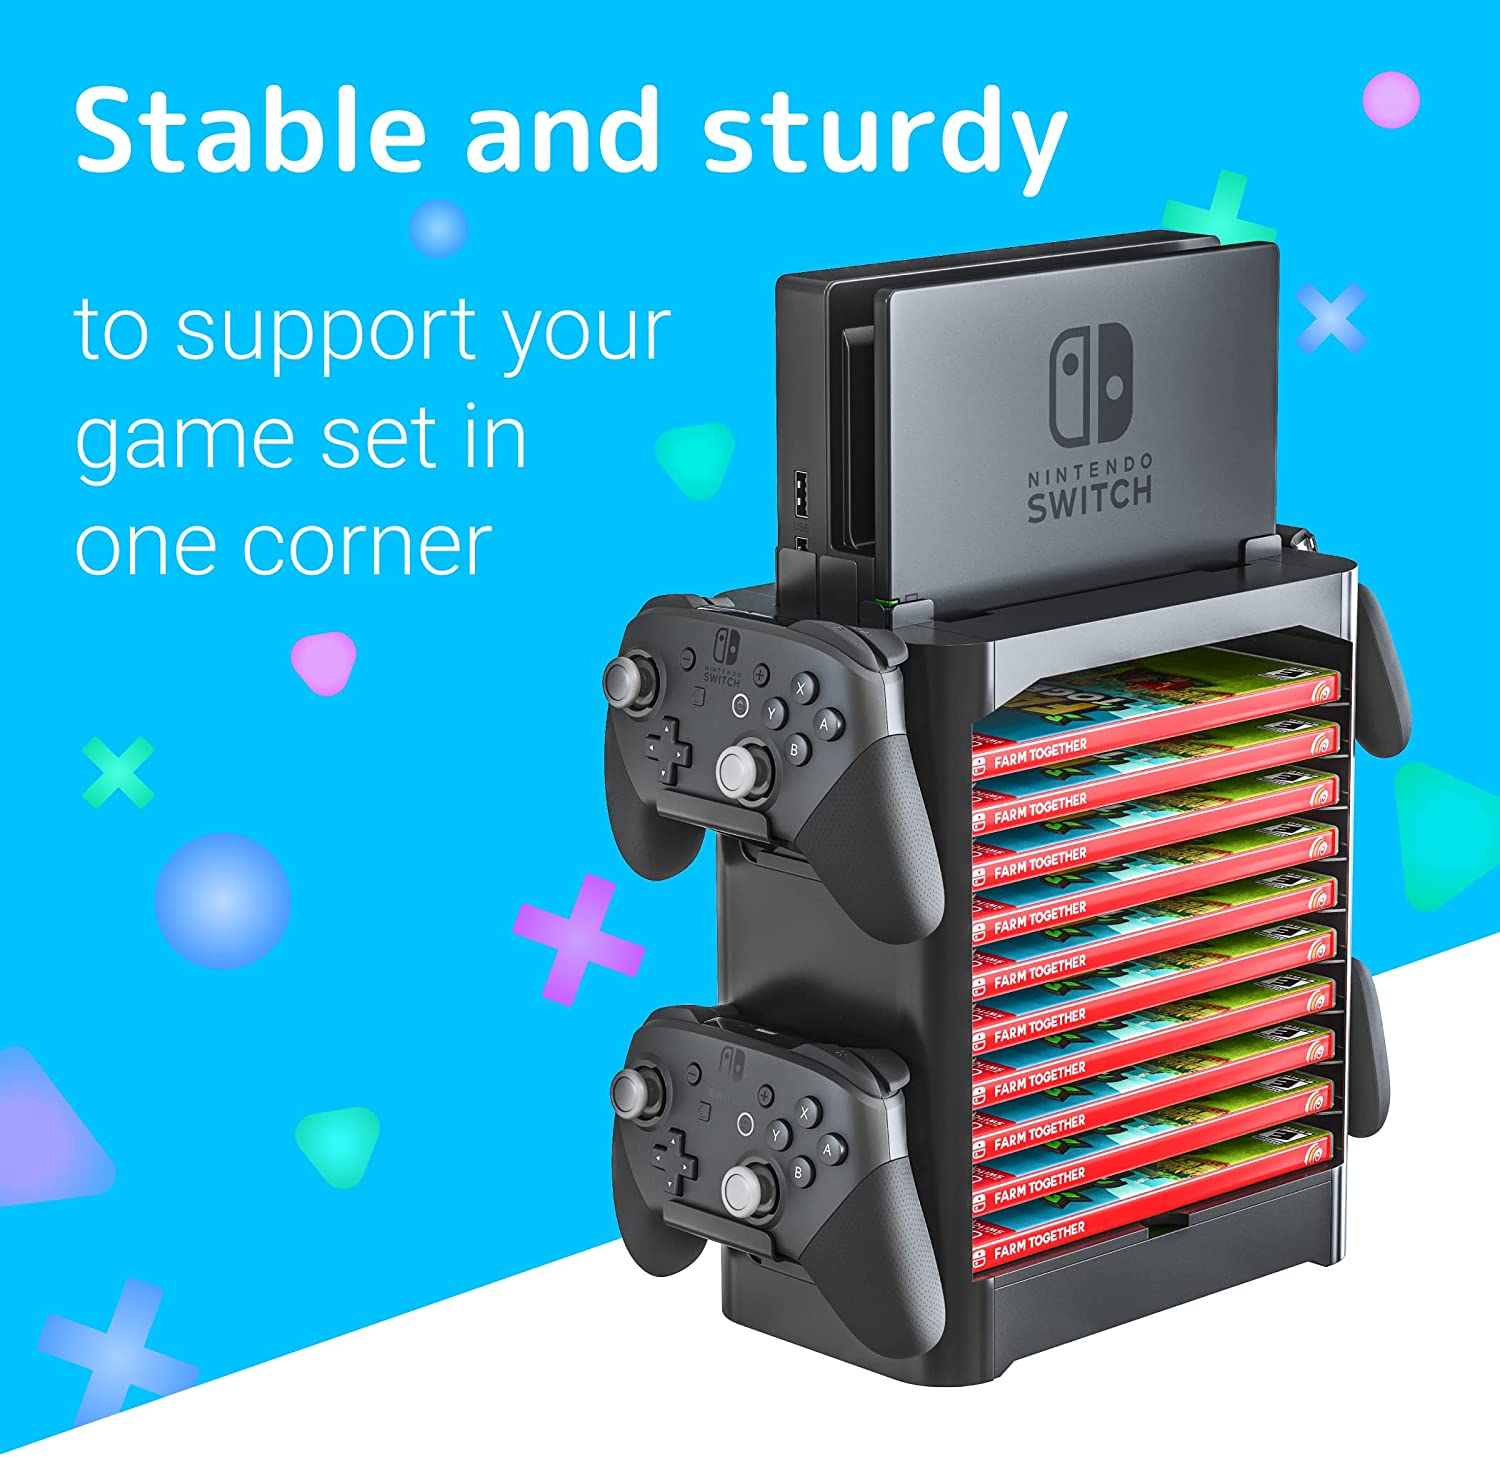 Skywin Game Storage Tower for Nintendo Switch - Nintendo Switch 